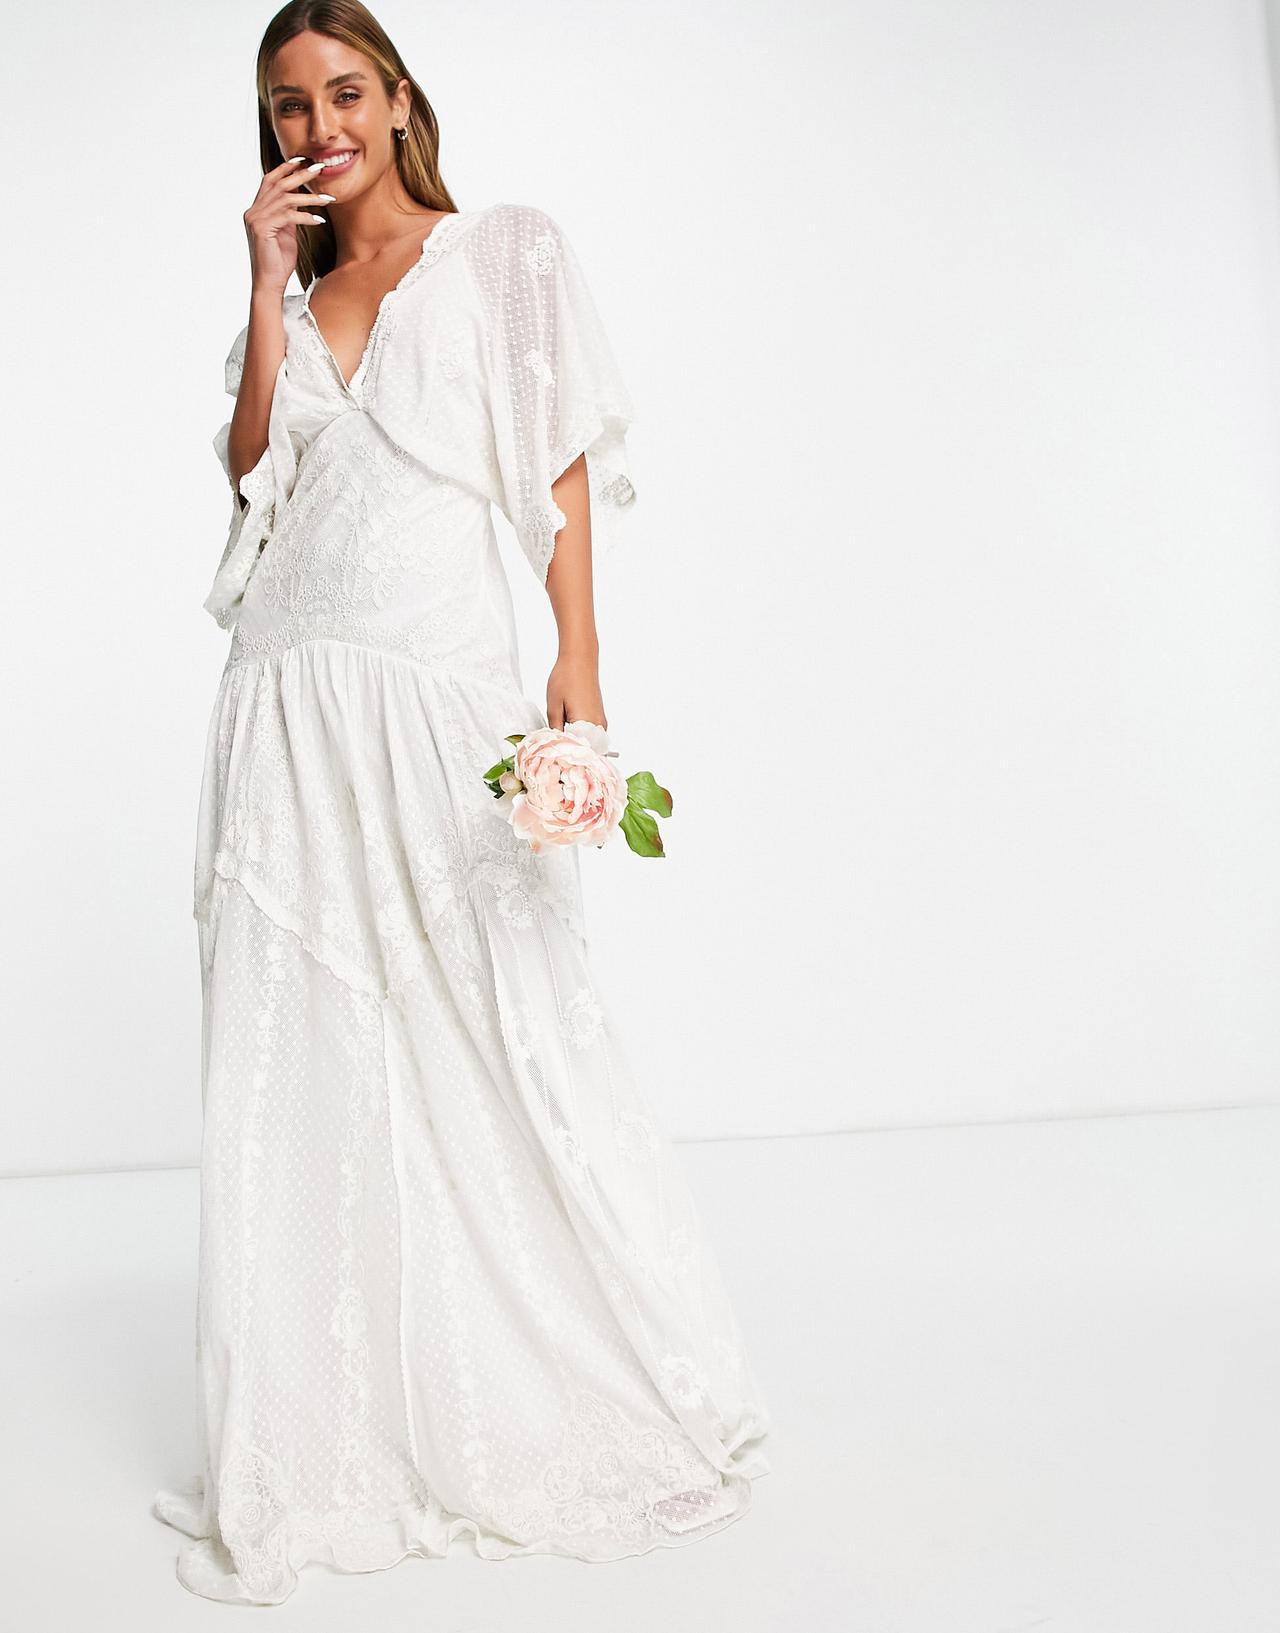 Model wearing a boho lace wedding dress